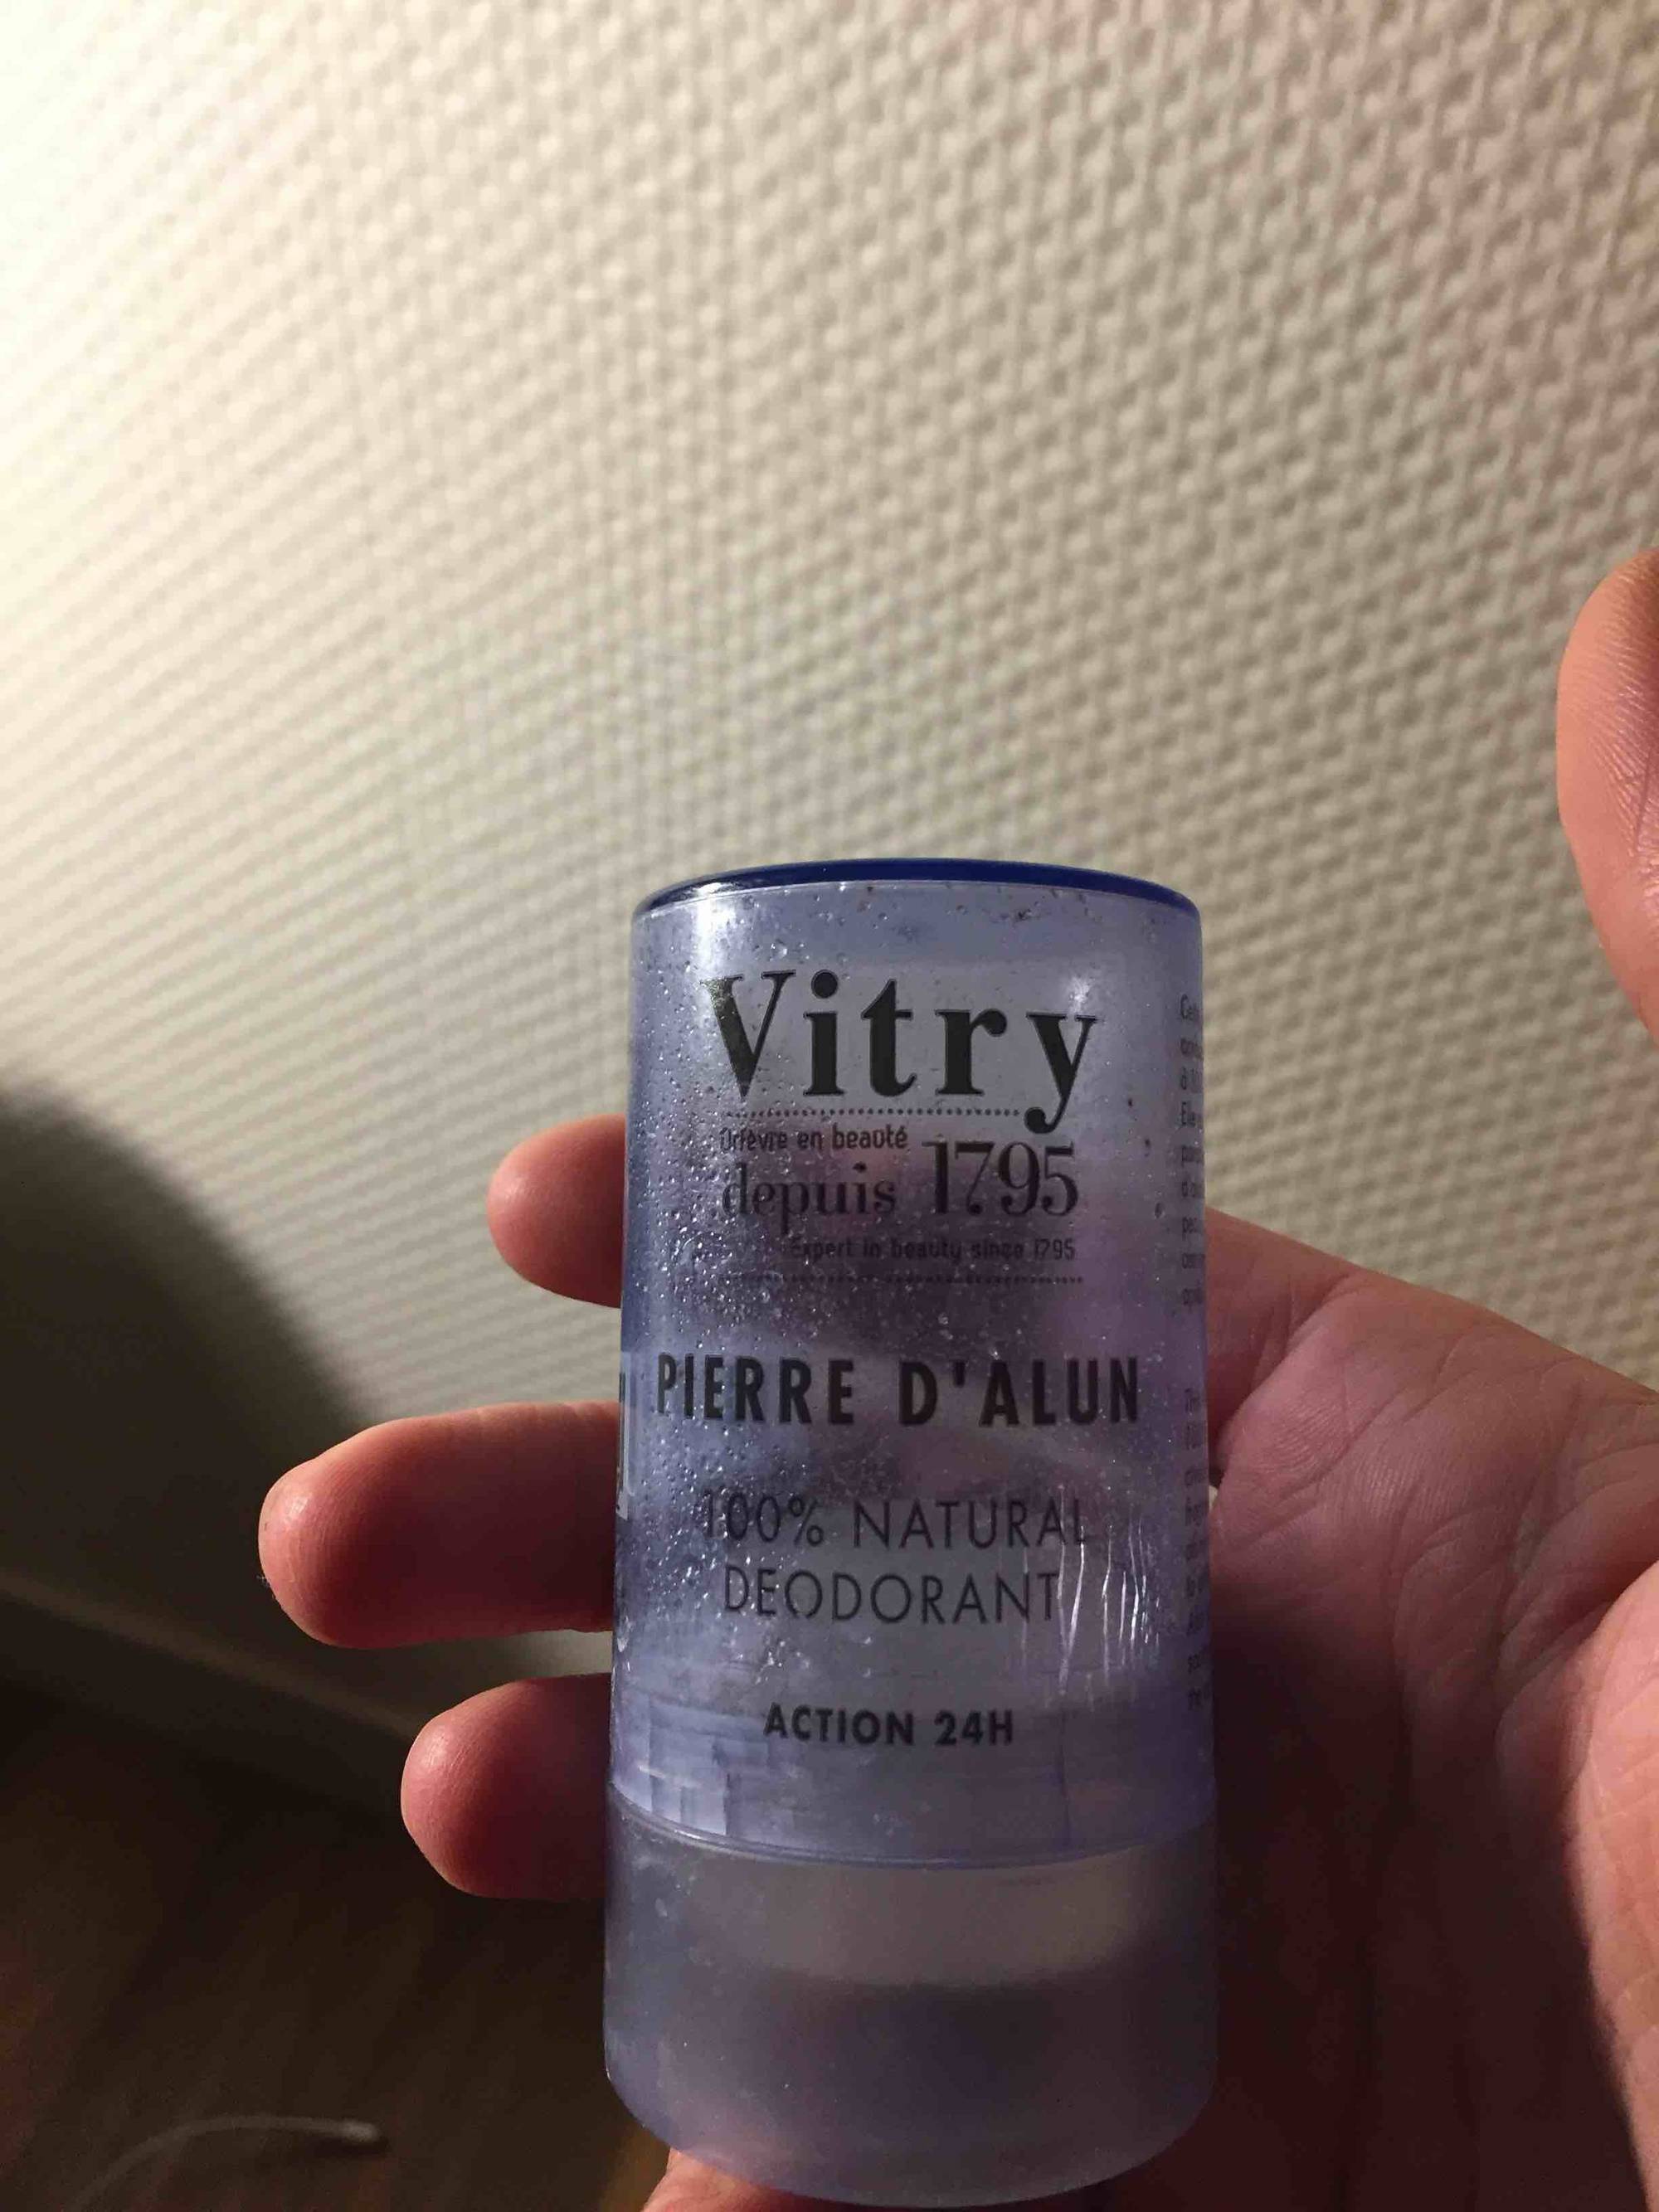 VITRY - Pierre d'alun - Natural déodorant